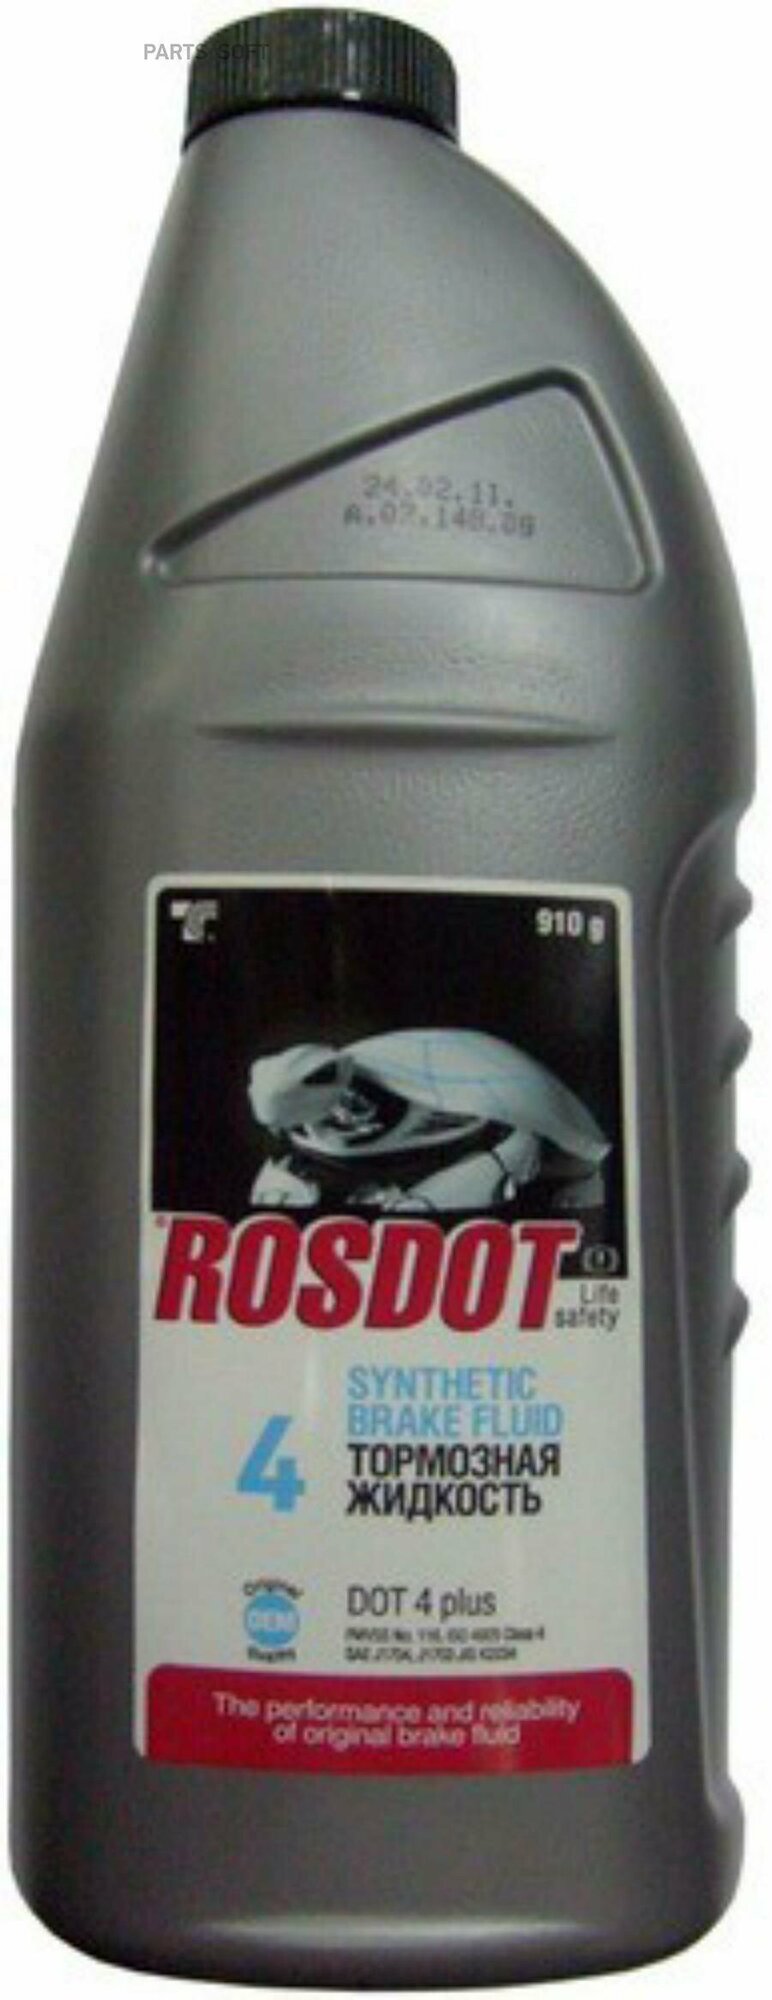 Тормозная жидкость ROSDOT 4, 910г ROSDOT / арт. 430101Н03 - (1 шт)